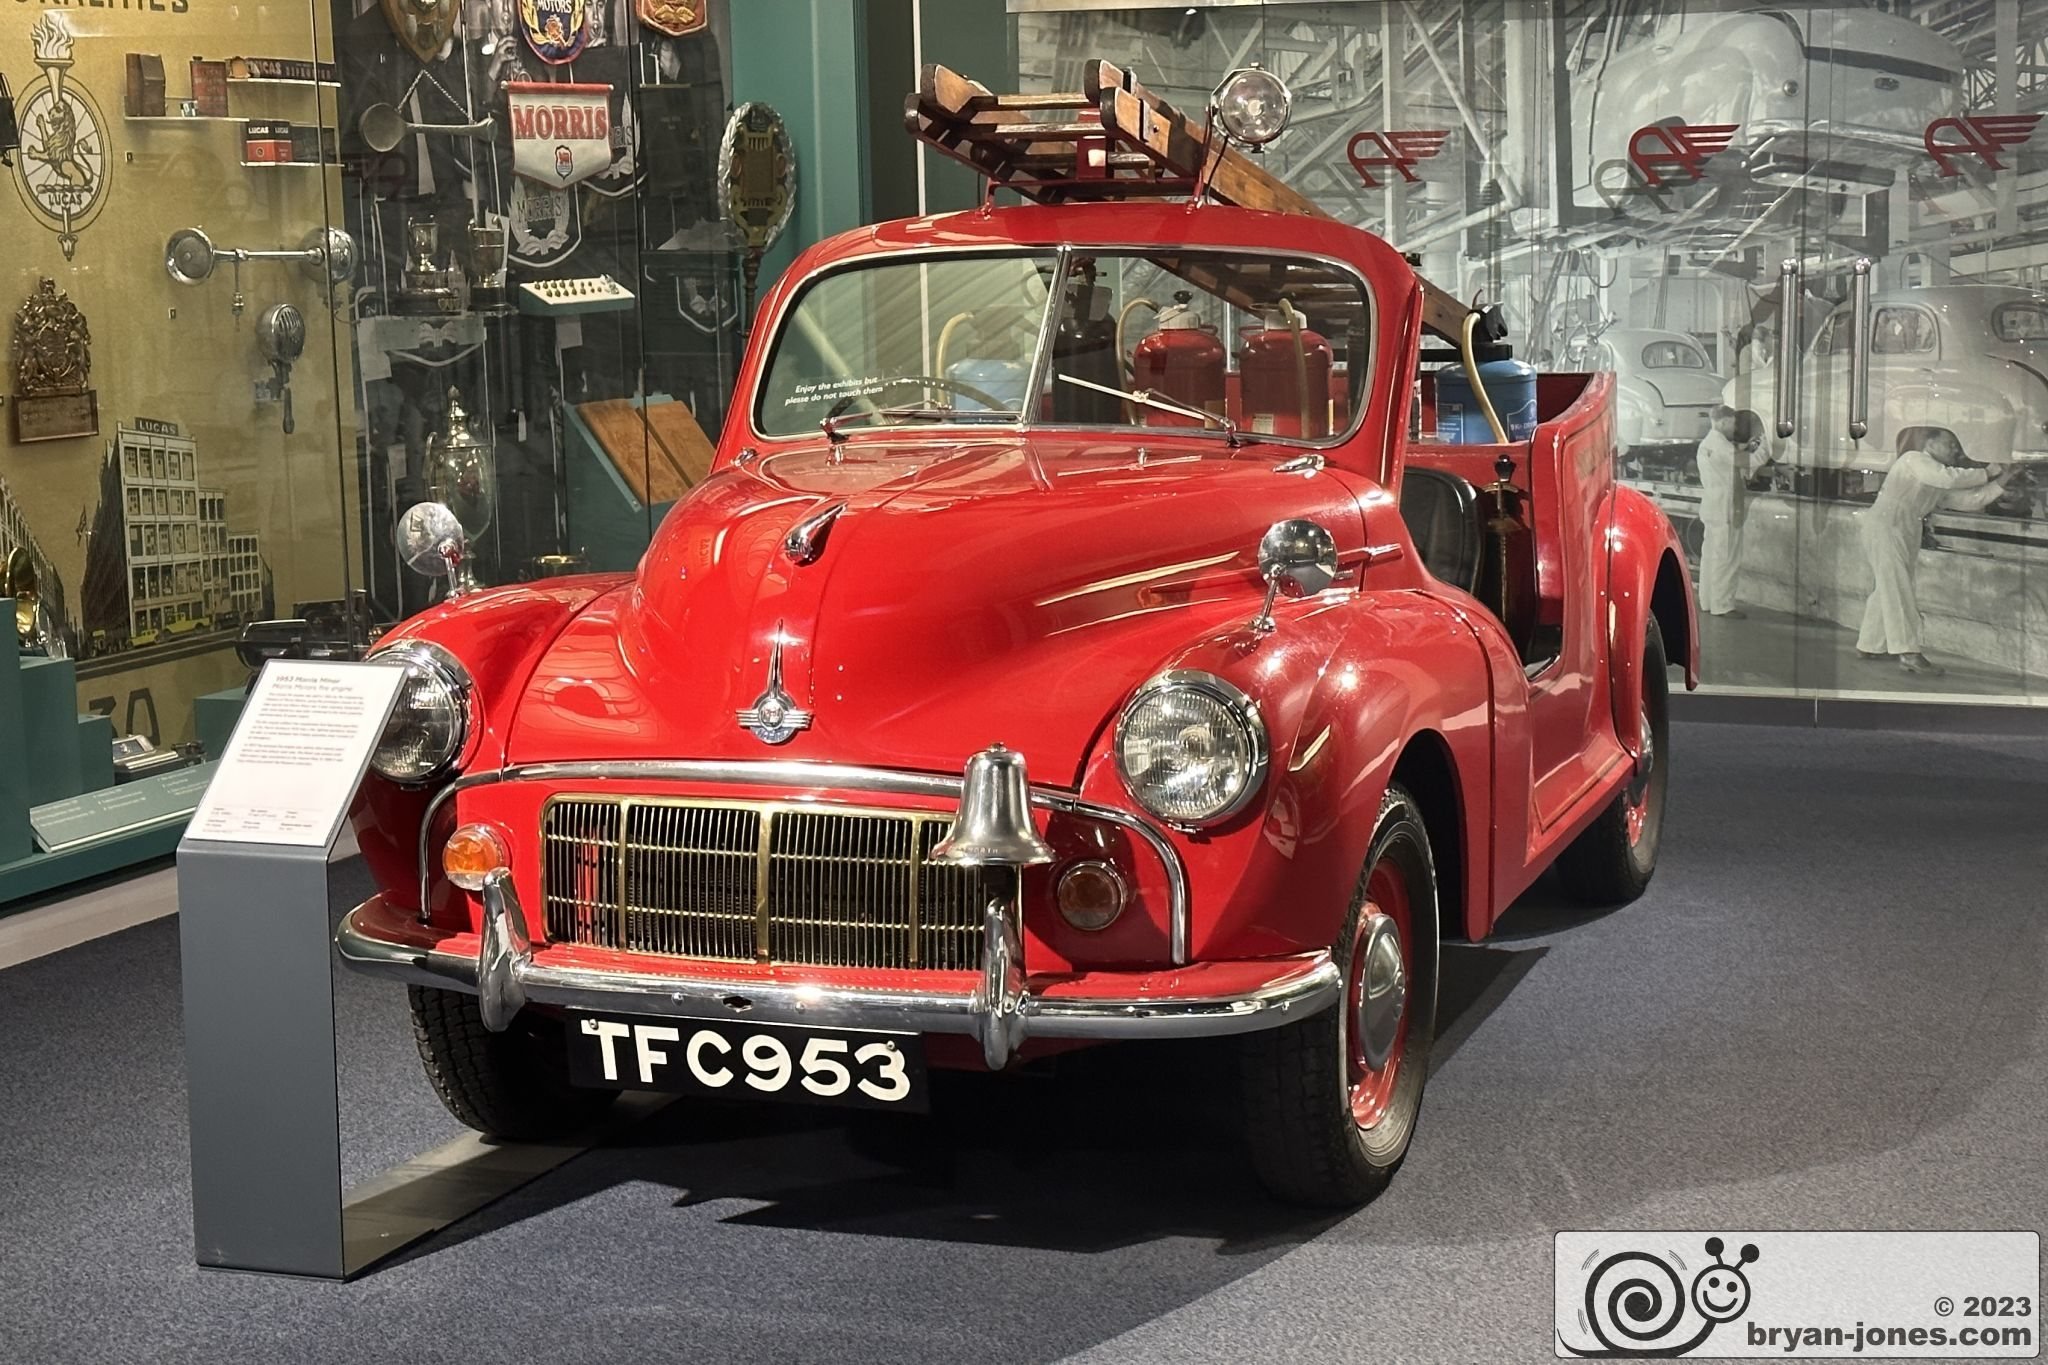 1953 Morris Minor fire engine TFC953 at the British Motor Museum in Gaydon, Warwickshire. 28-Oct-2023.